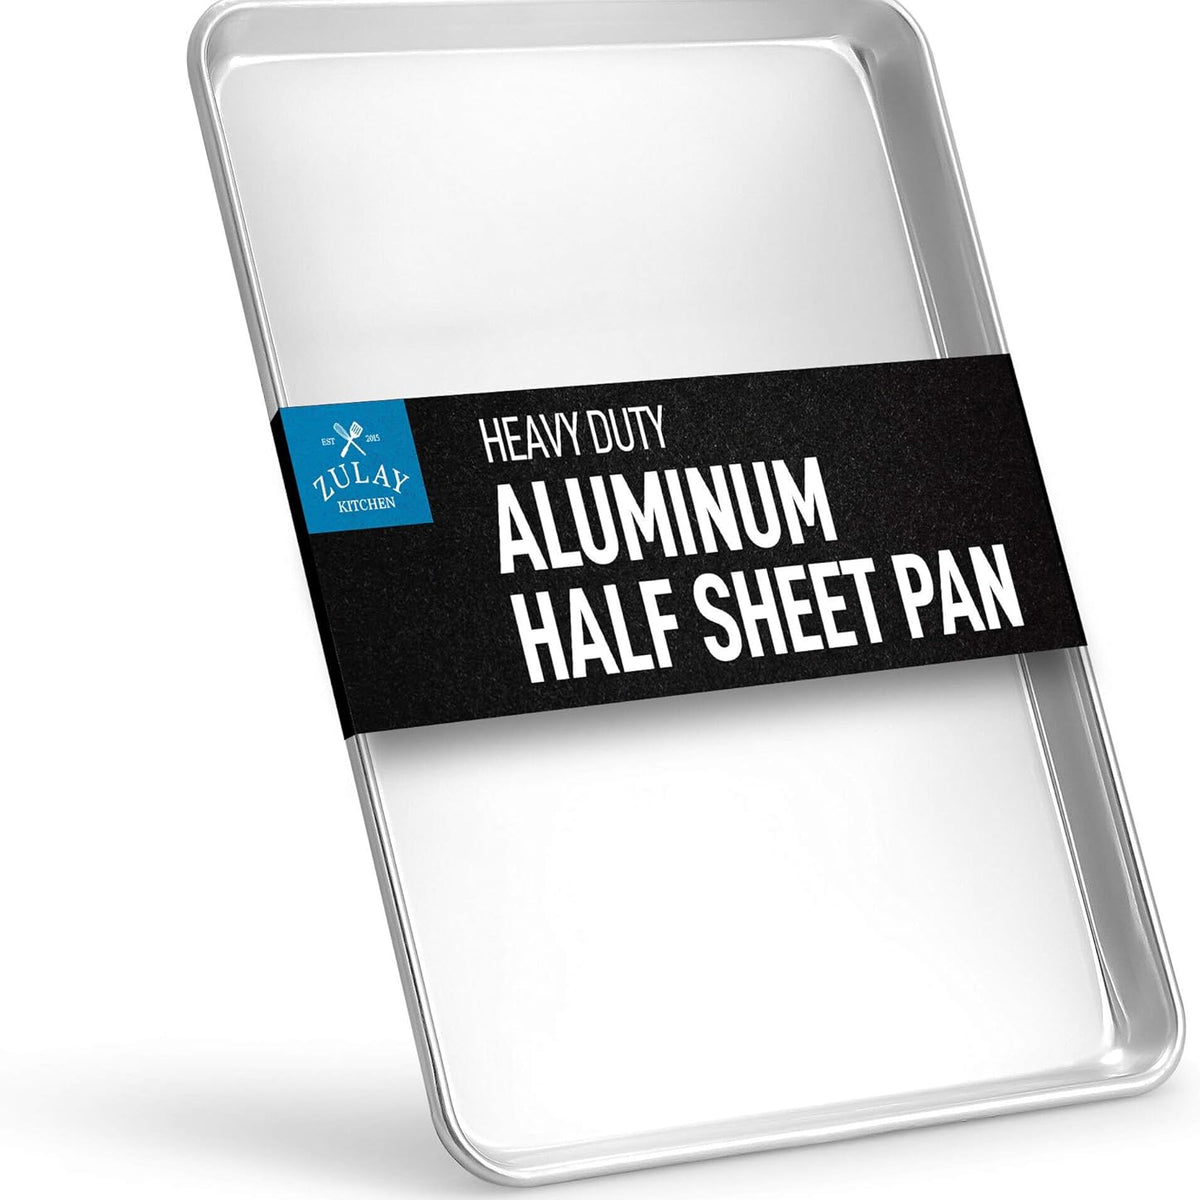 Aluminum Baking Pan - 10 x 13 x 1, Quarter Sheet H-10793 - Uline